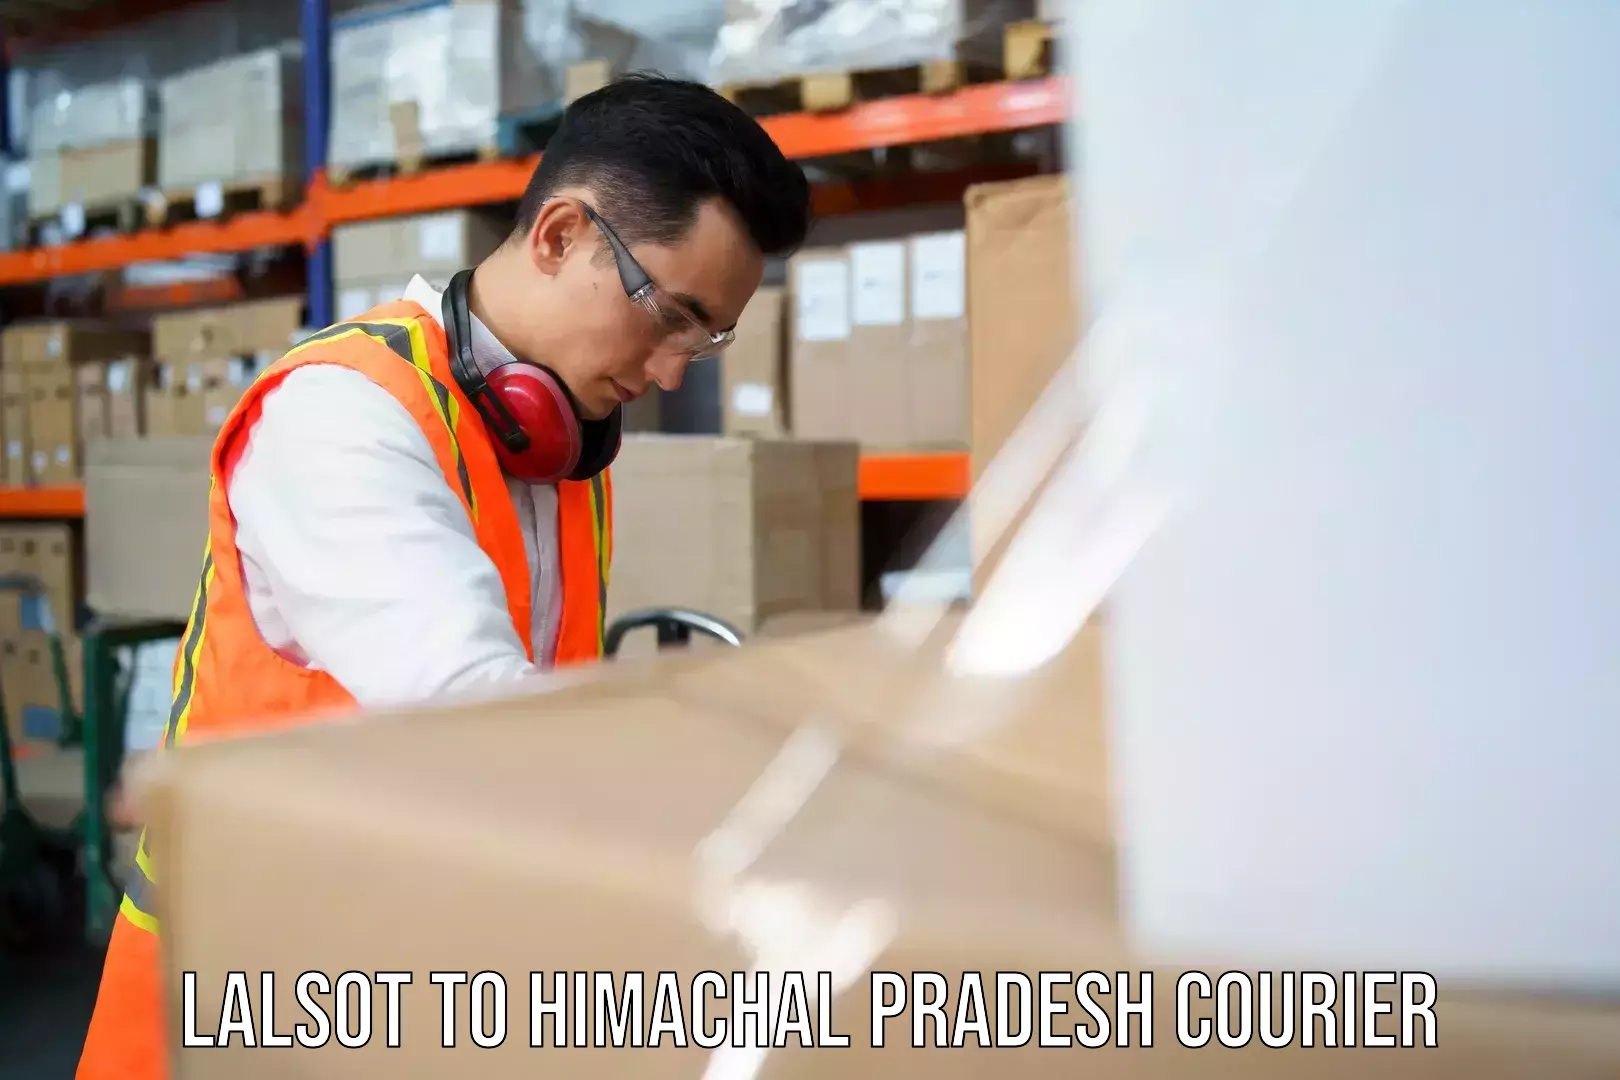 Lightweight parcel options Lalsot to Himachal Pradesh